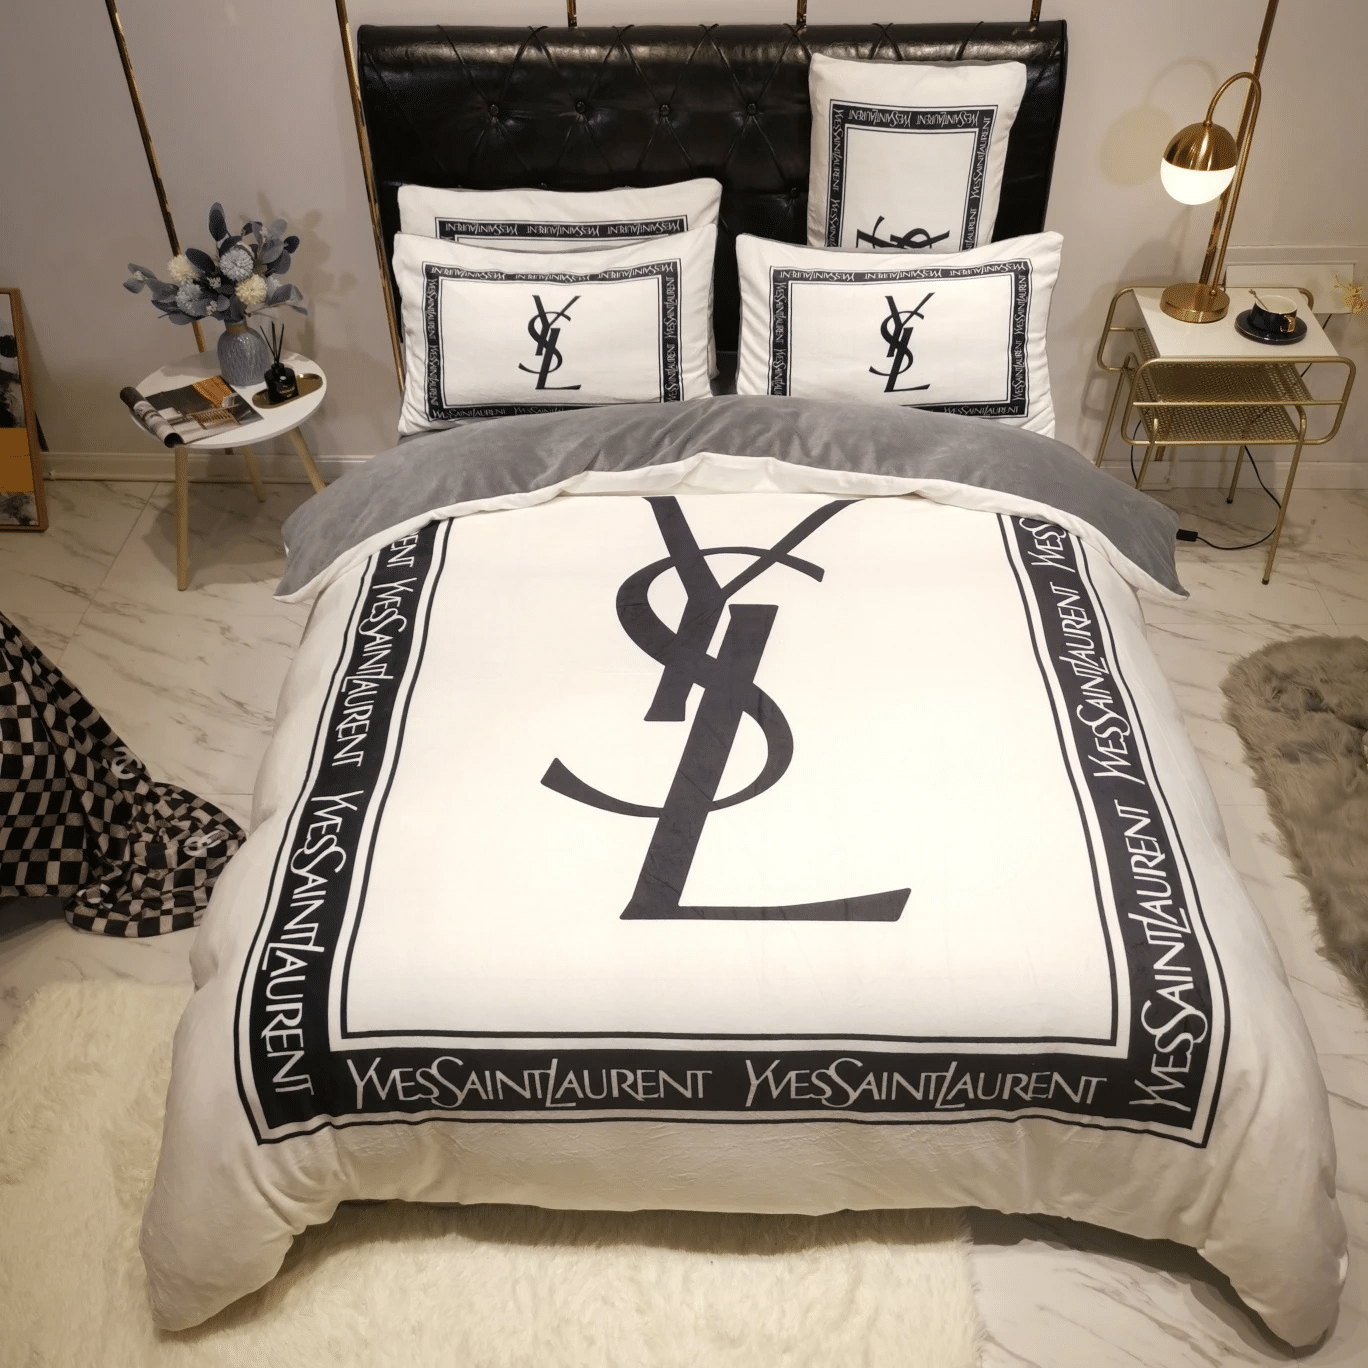 Ysl Yves Saint Laurent Luxury Brand Type 01 Bedding Sets